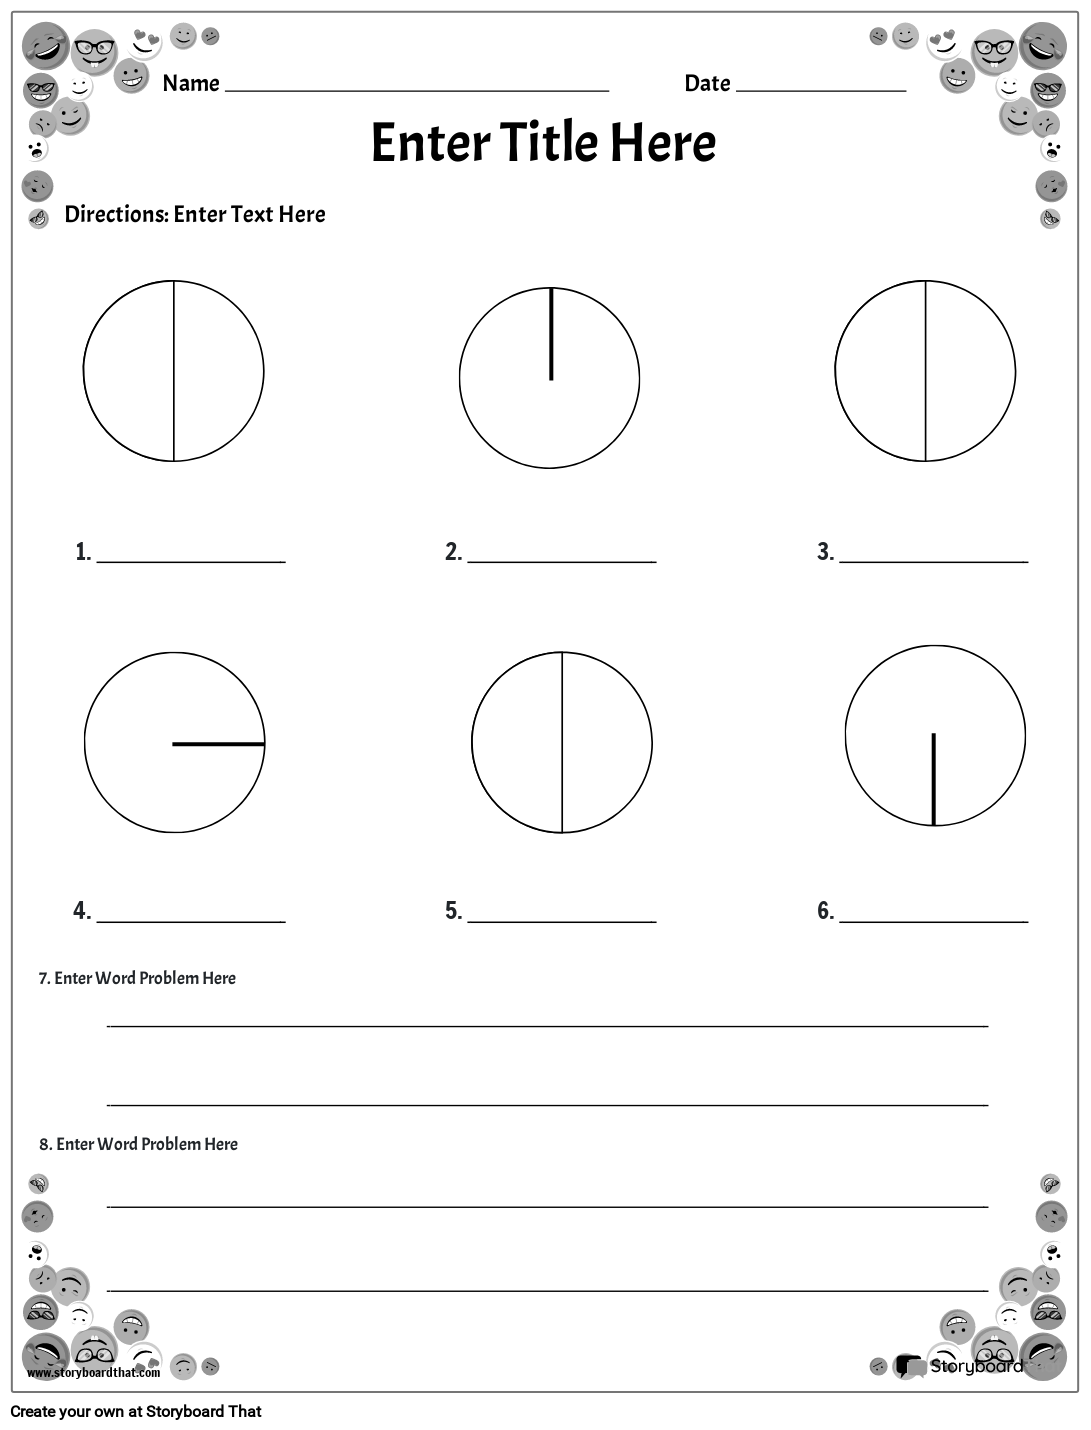 Circumference of circle emoji black and white